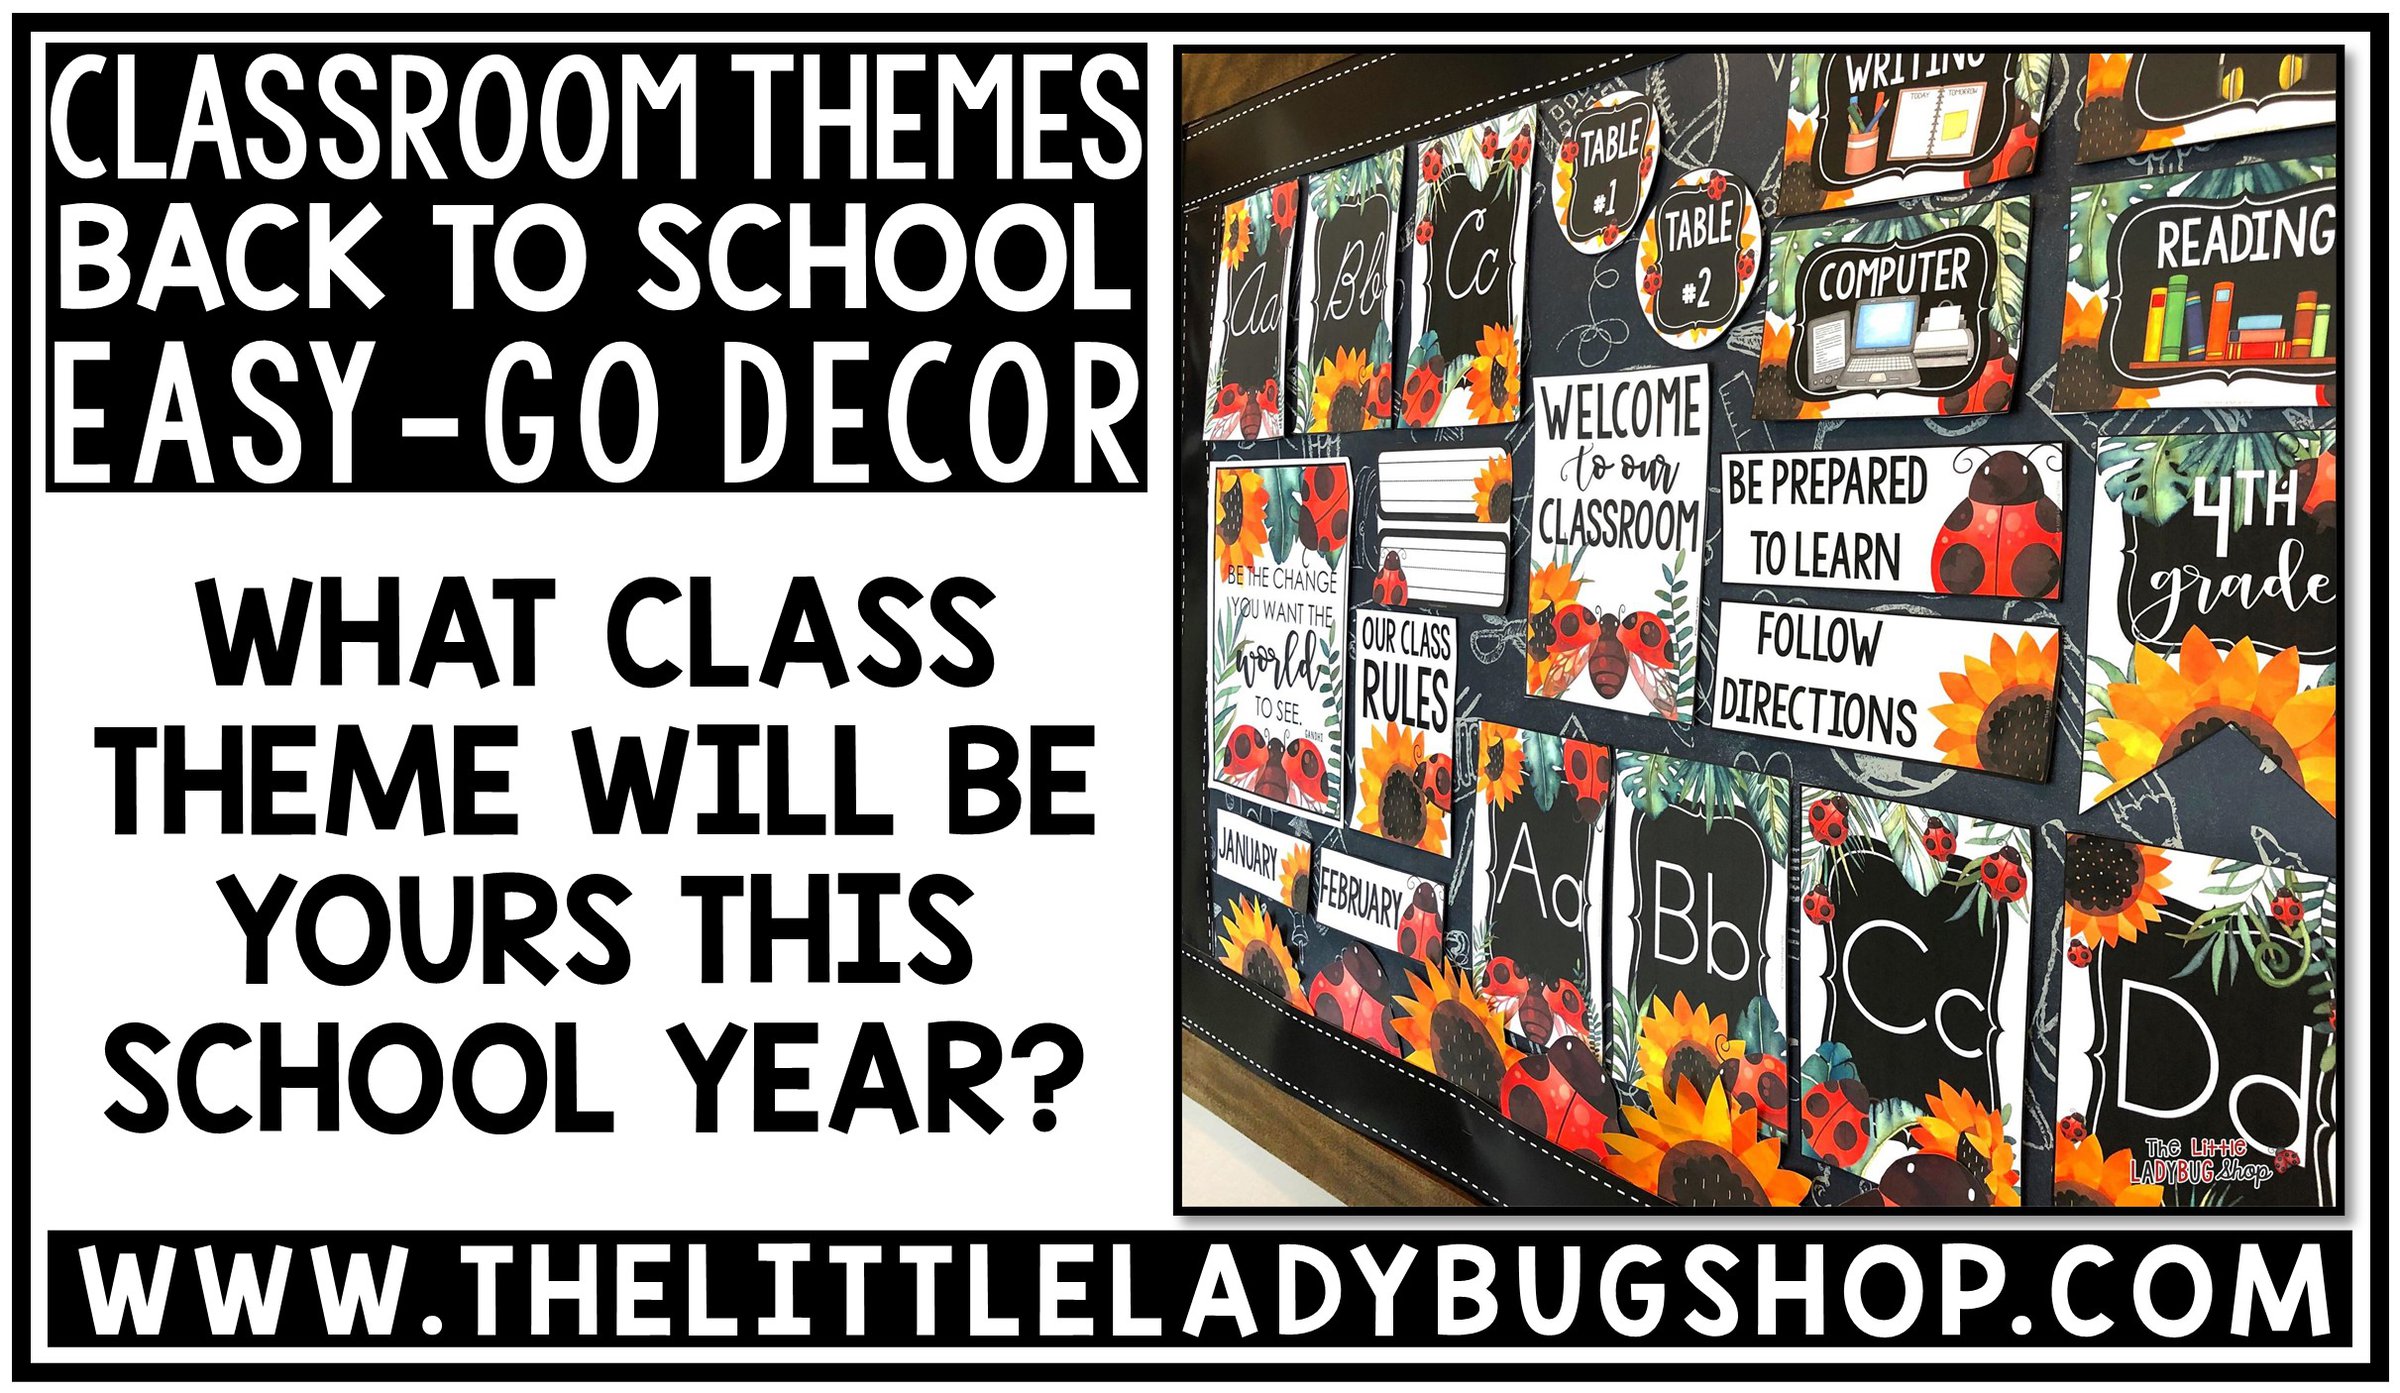 Classroom Decor Themes